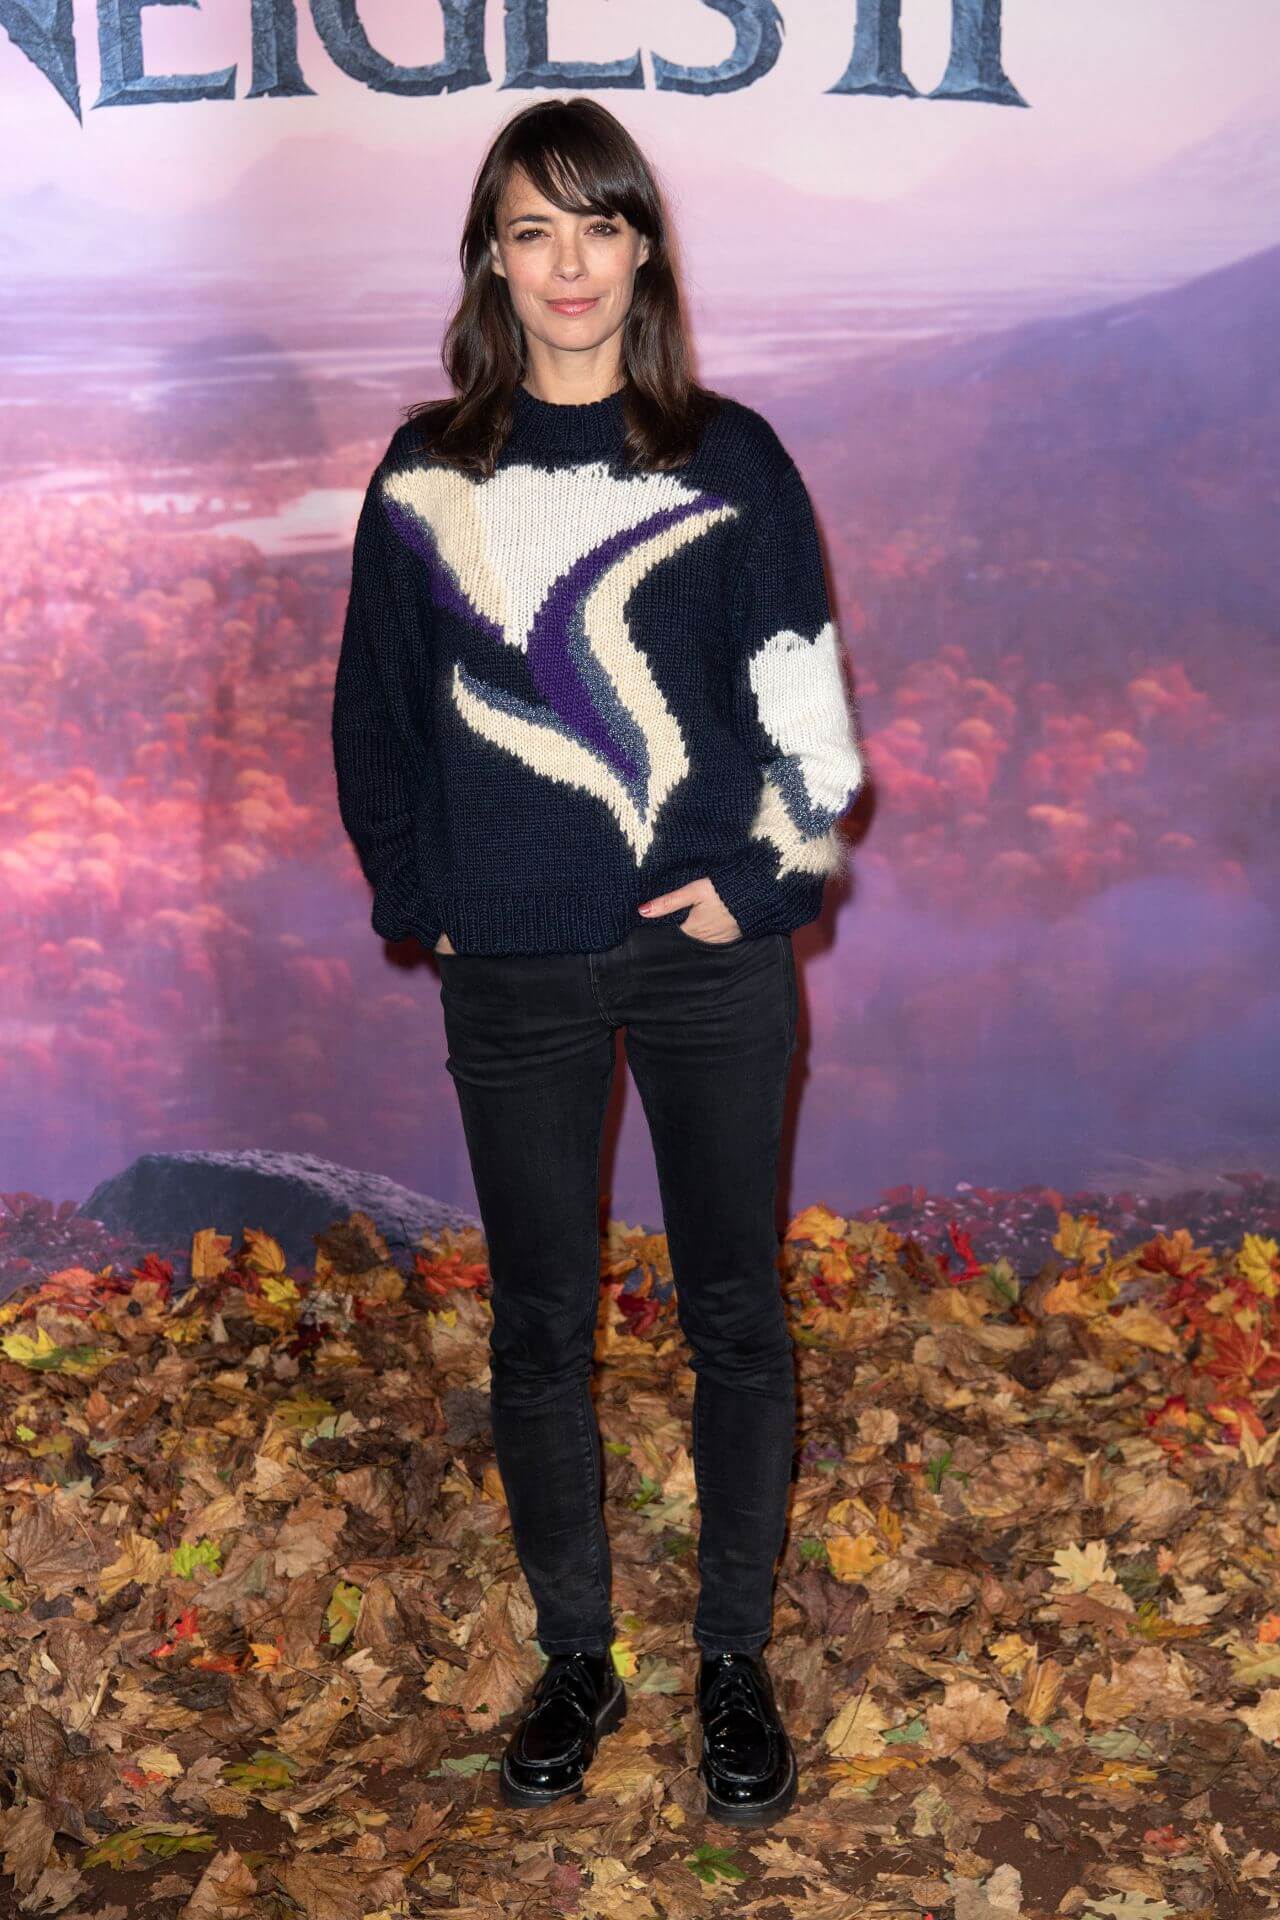 Berenice Bejo  In Blue Woolen Sweater With Black Jeans At “Frozen 2” Premiere in Paris